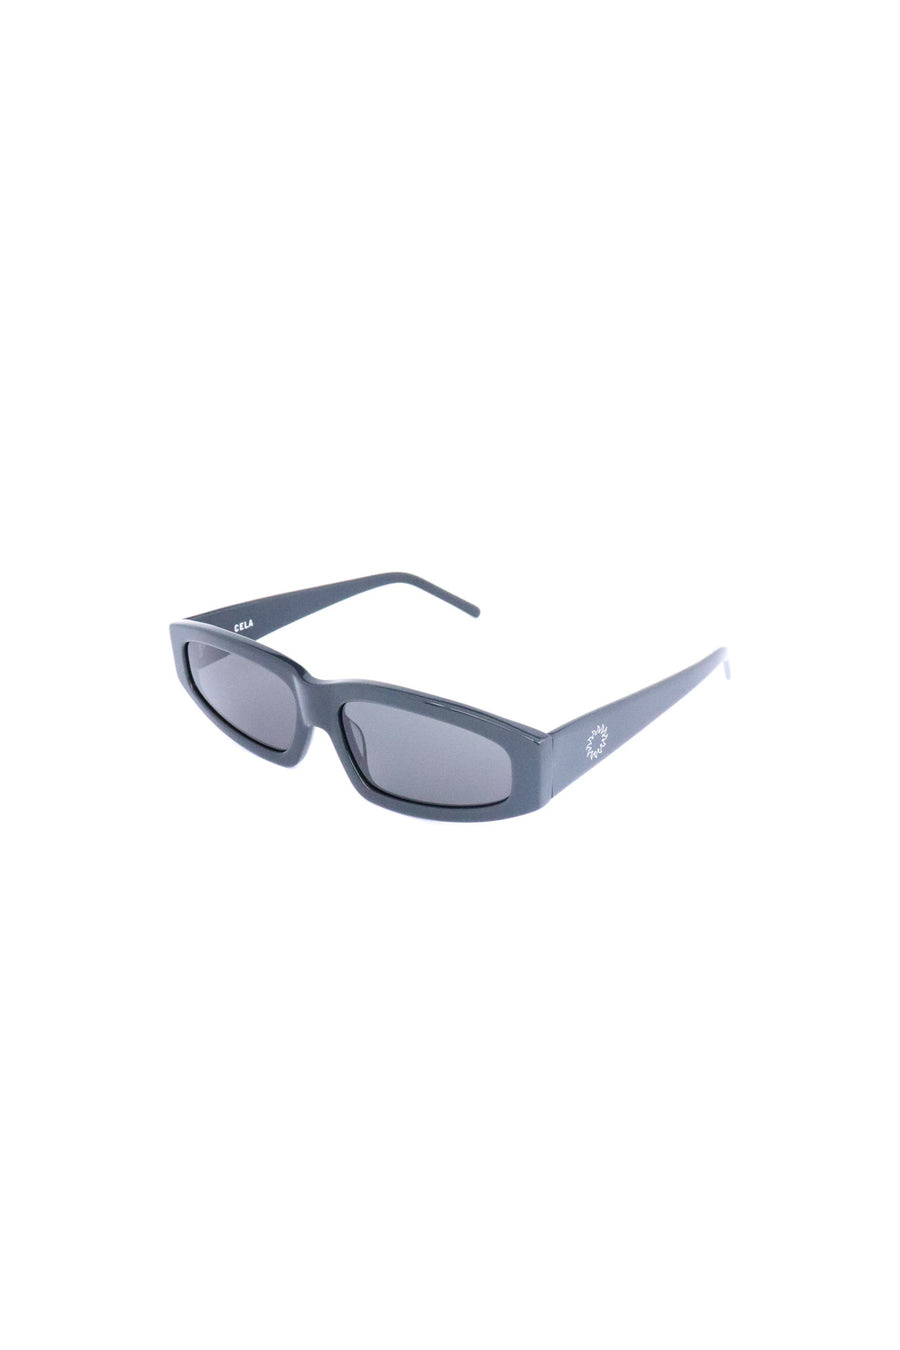 Avoir Eyewear - Cela in Navy - Sunglasses